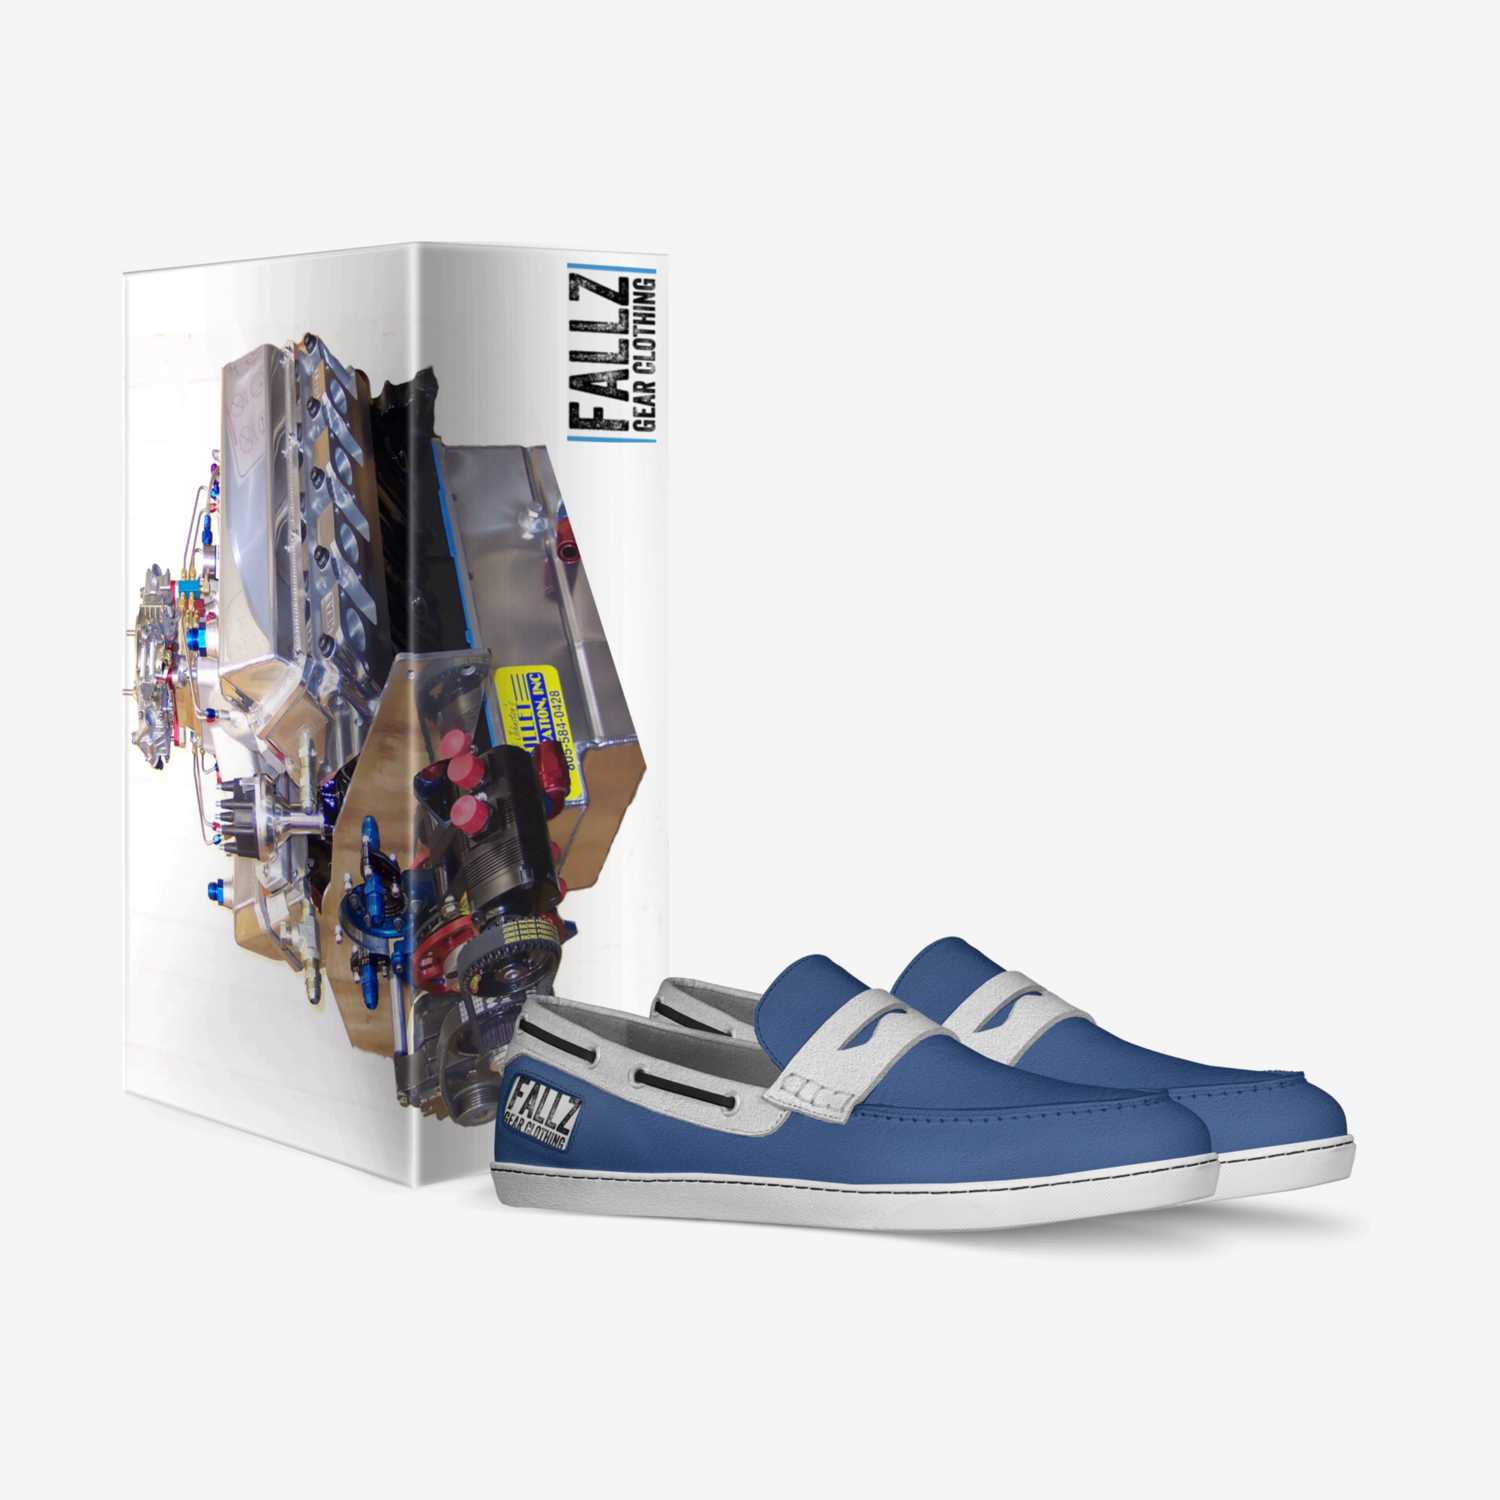 Fallz Gear: G Mod custom made in Italy shoes by Fallz Gear | Box view